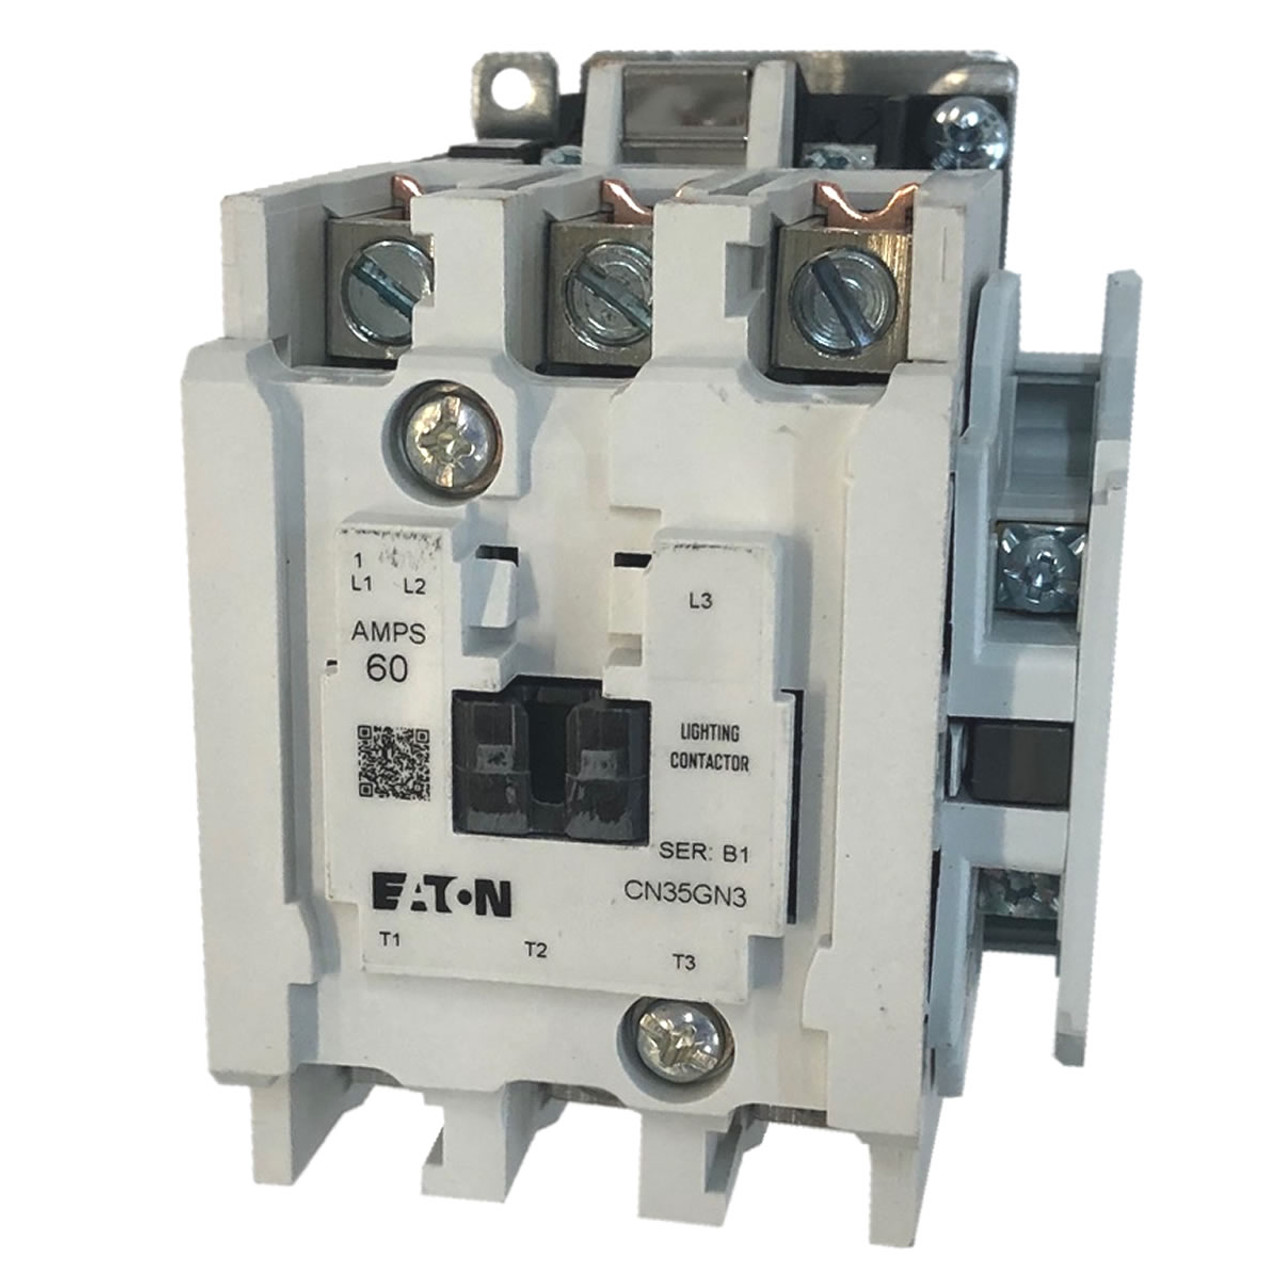 Eaton CN35GN3TB lighting contactor